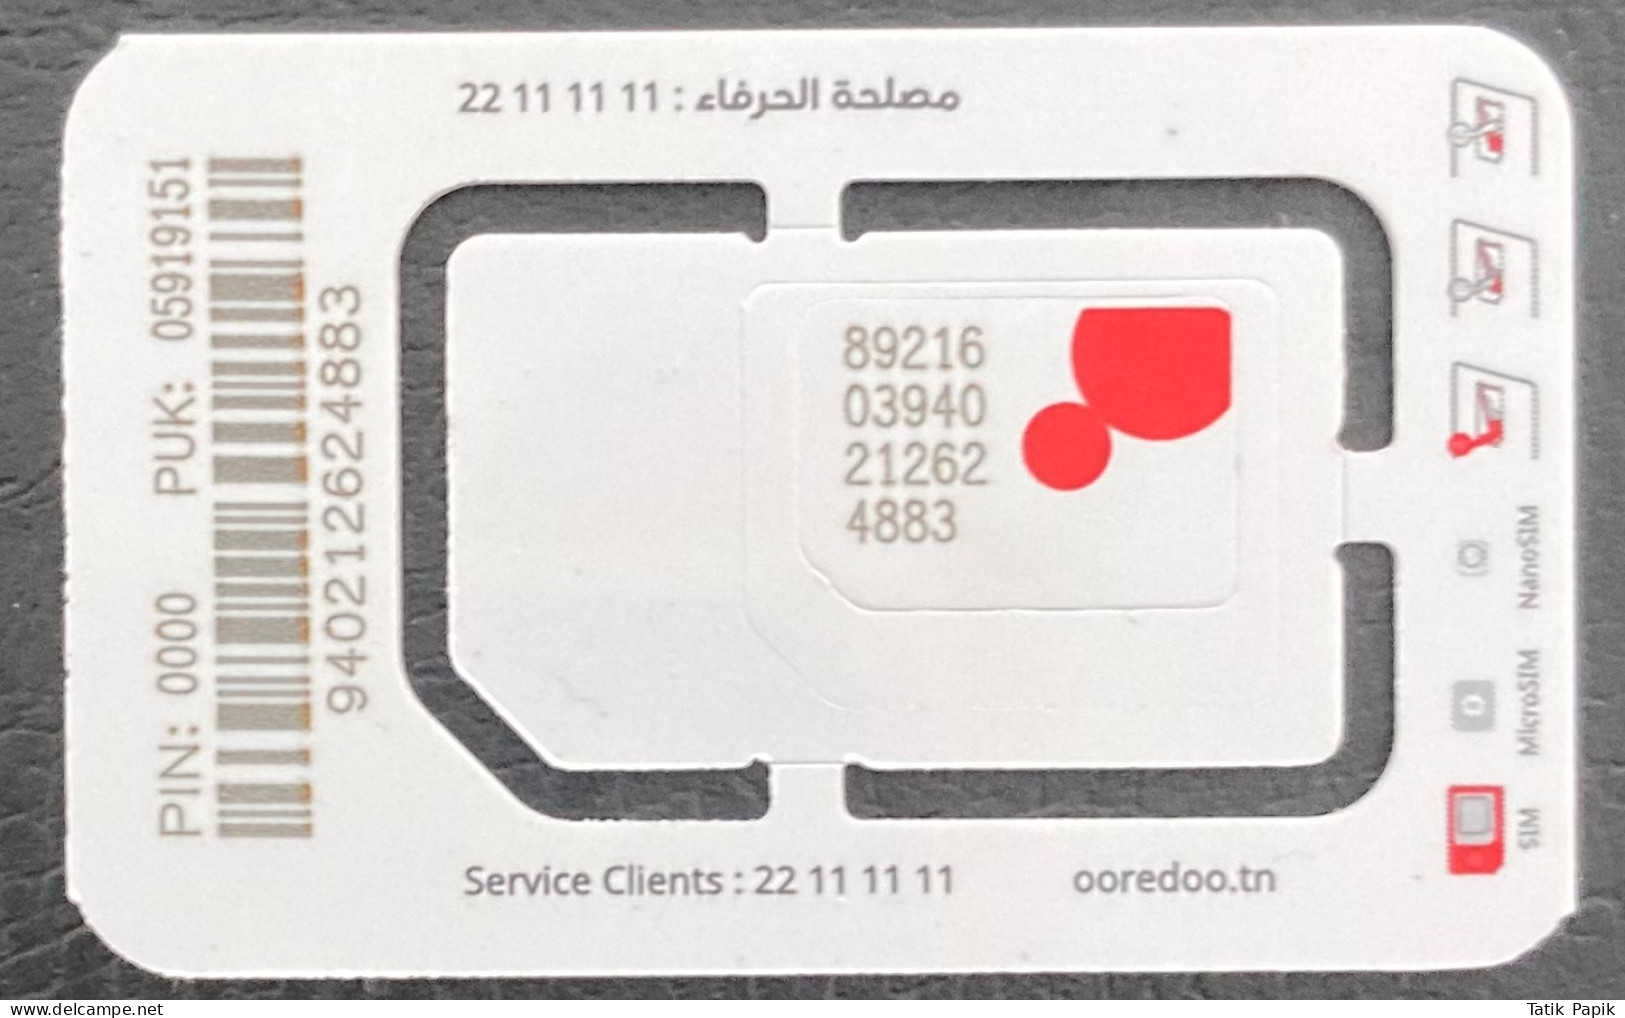 Tunisie Tunisia Ooredeoo Telecom GSM  Nano SIM Card New UNC Logo 3G 4G 5G Red White - Tunisie